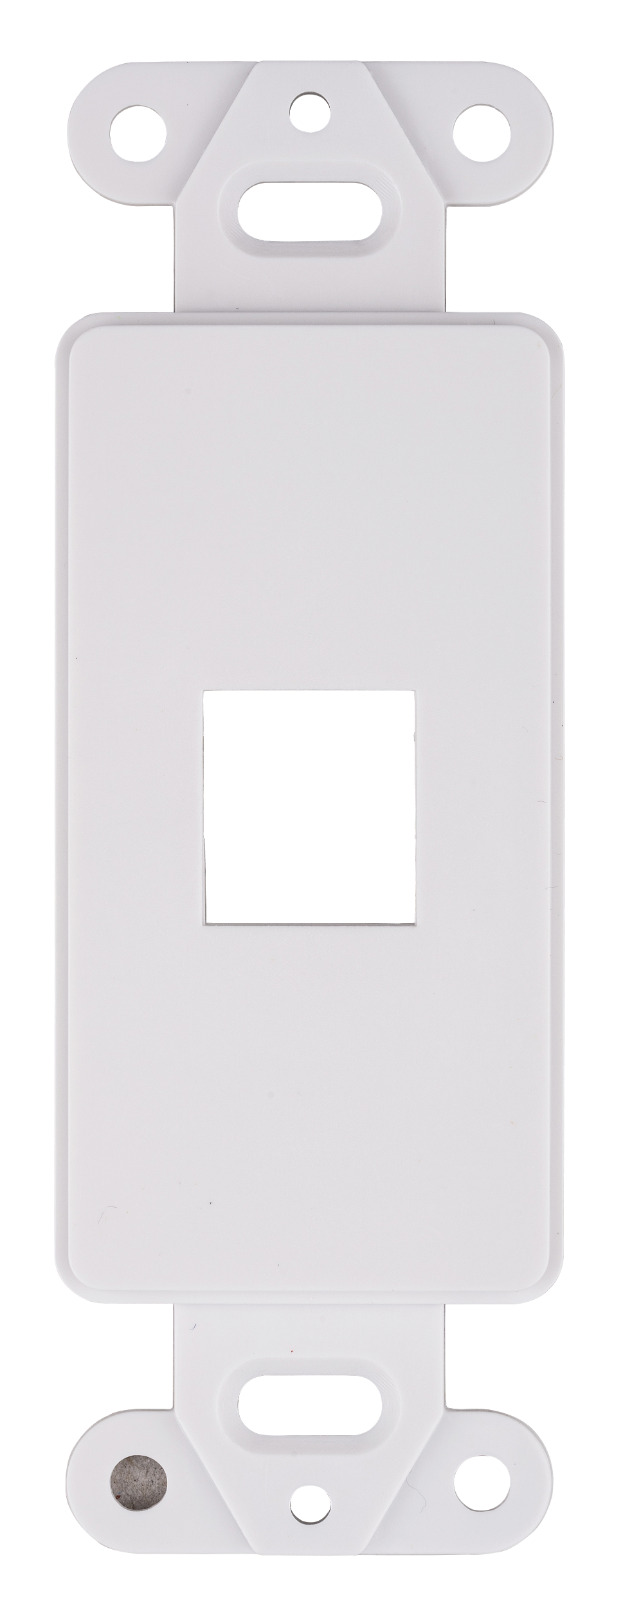 Decora Wall Plate Keystone Jack Insert Snap In Blank 1/2/3/4 Port White Pack Lot